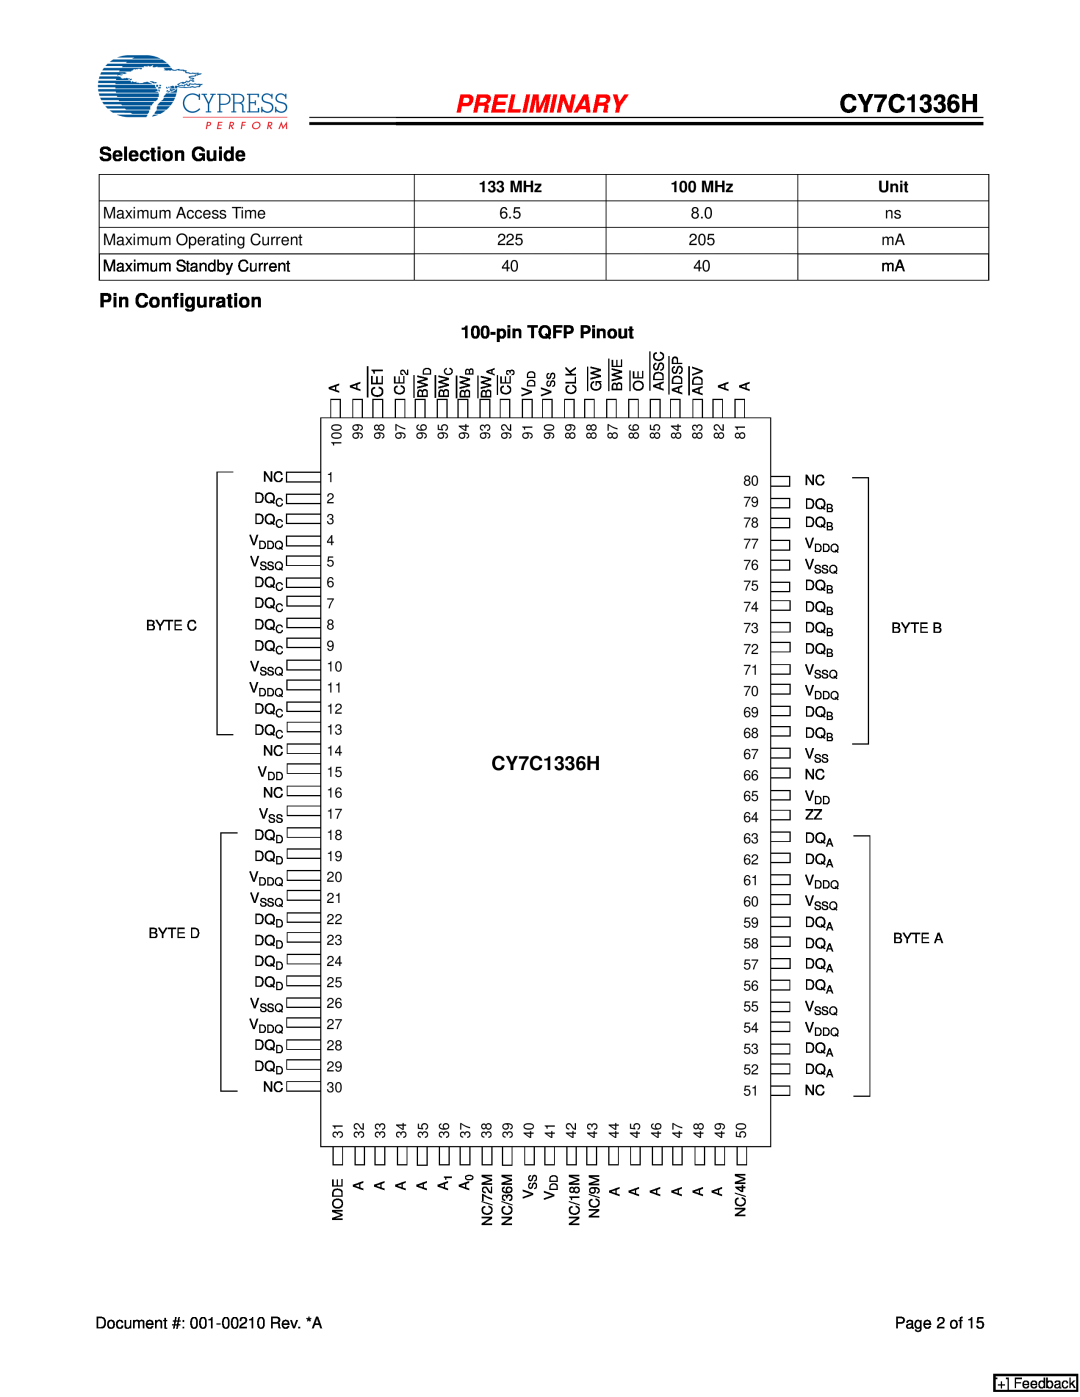 Cypress manual Preliminary, Selection Guide, Pin Configuration, 15CY7C1336H, pin TQFP Pinout, + Feedback 